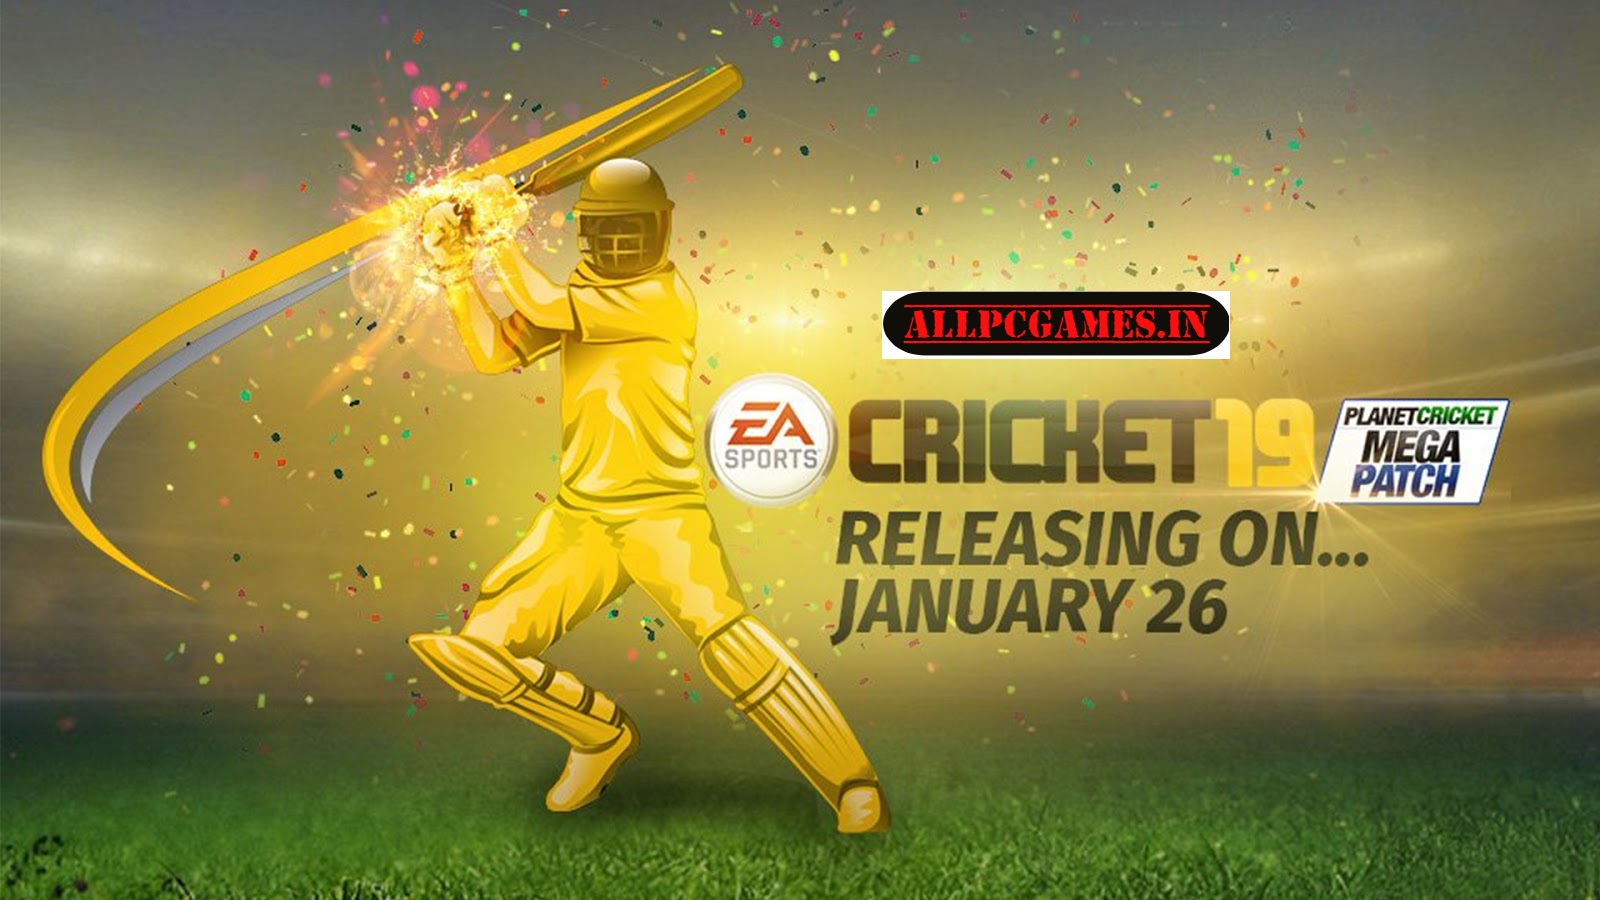 ea cricket 19 pc game download